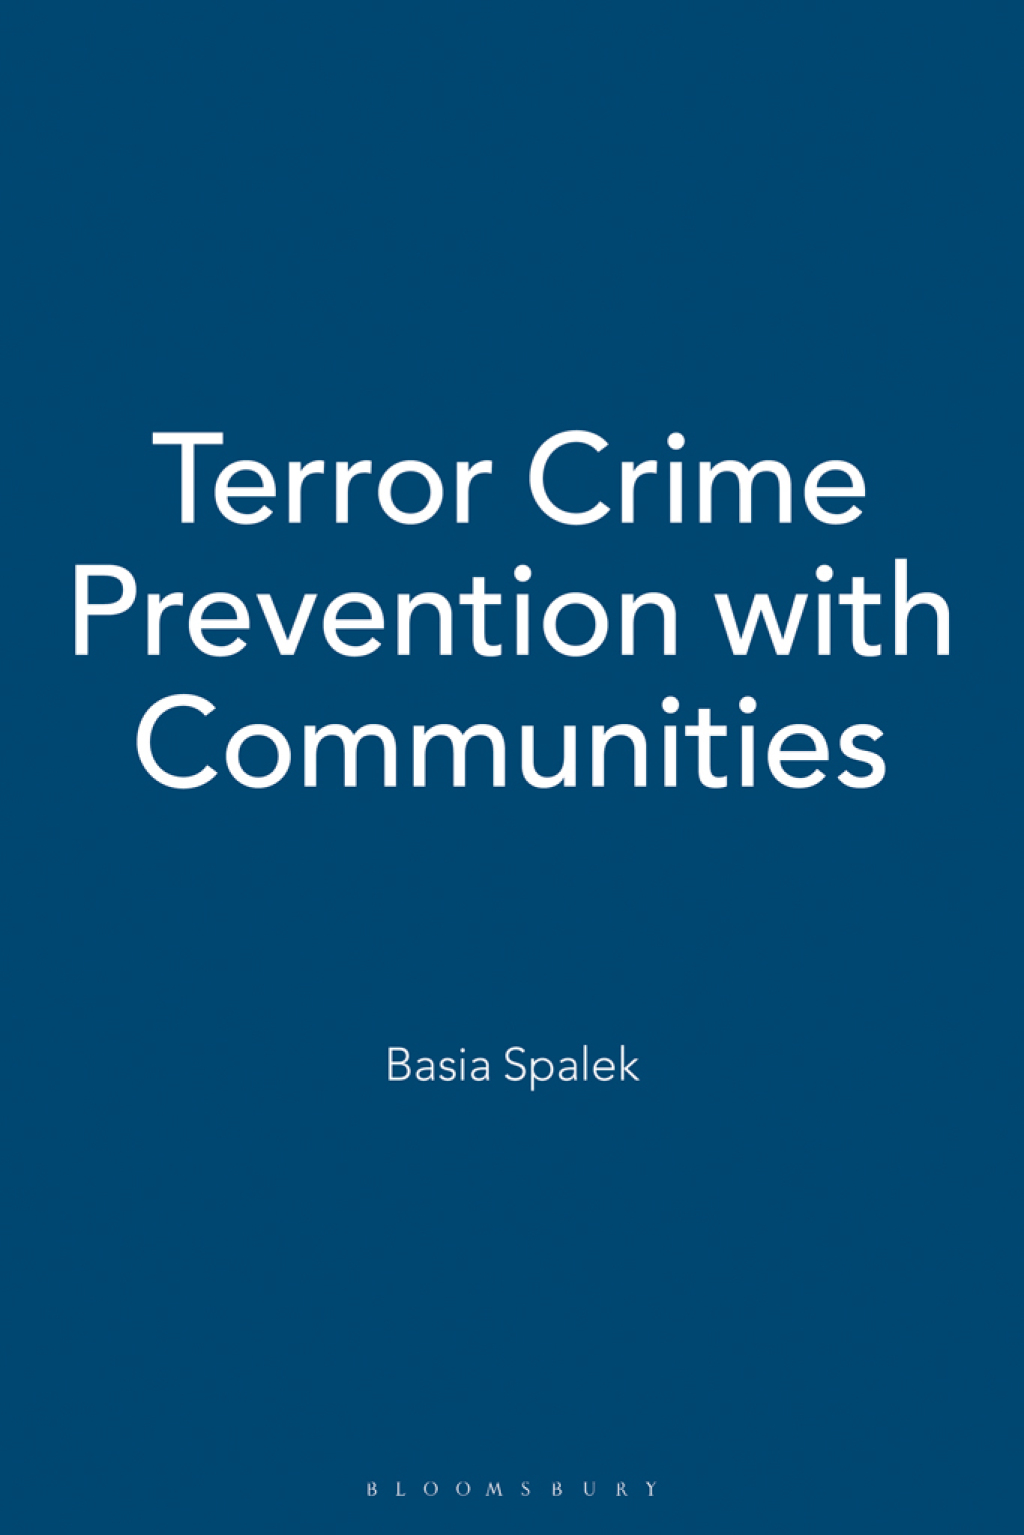 Terror Crime Prevention with Communities (eBook) - Basia Spalek